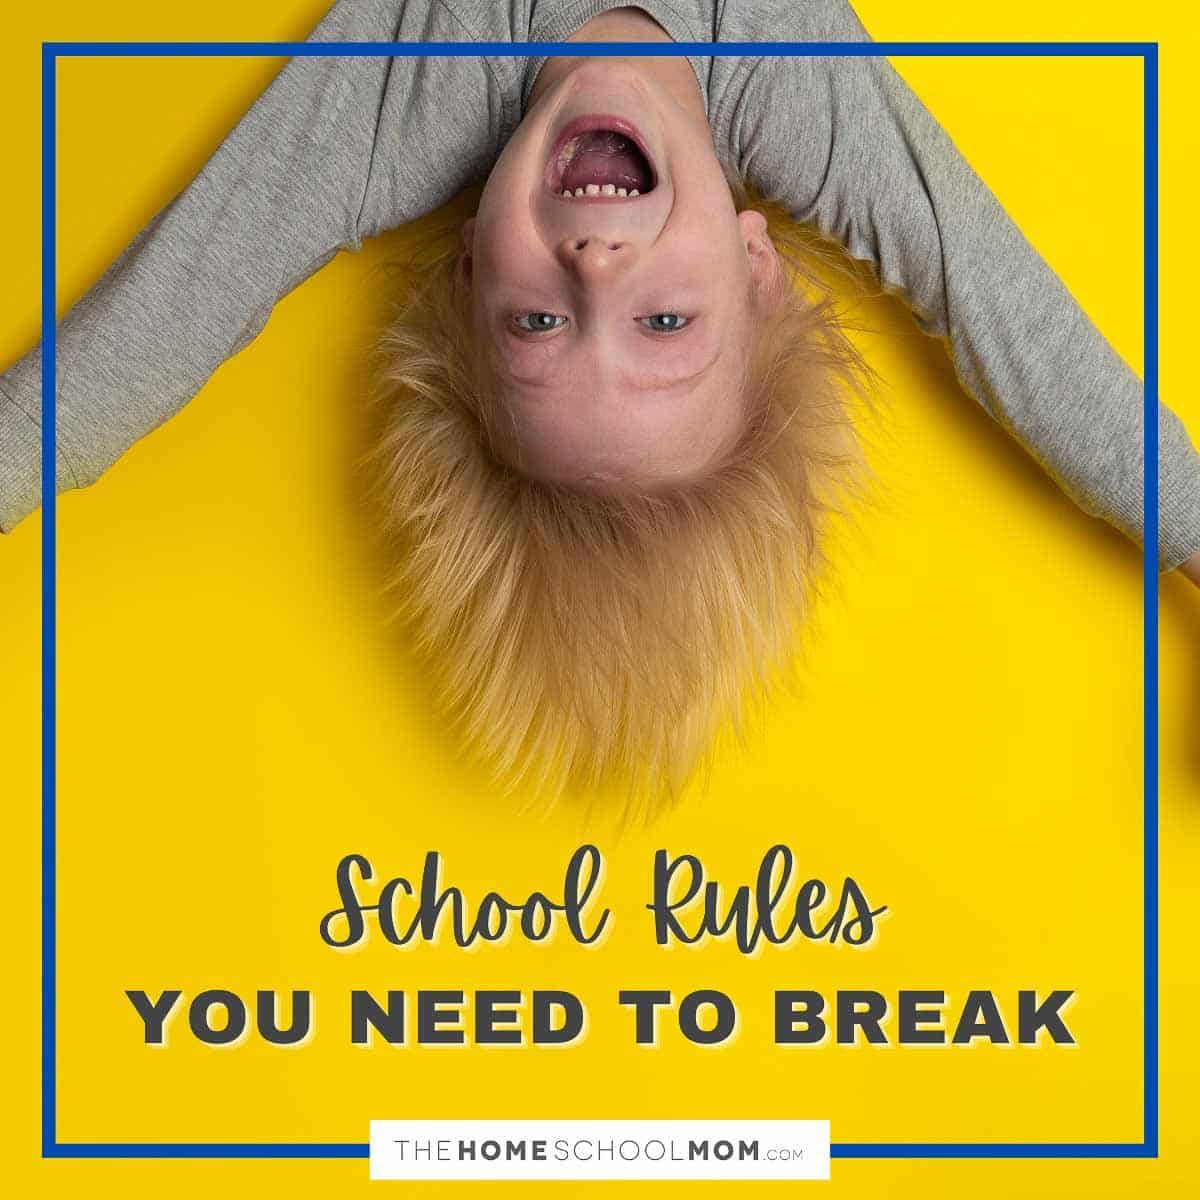 School rules you need to break.